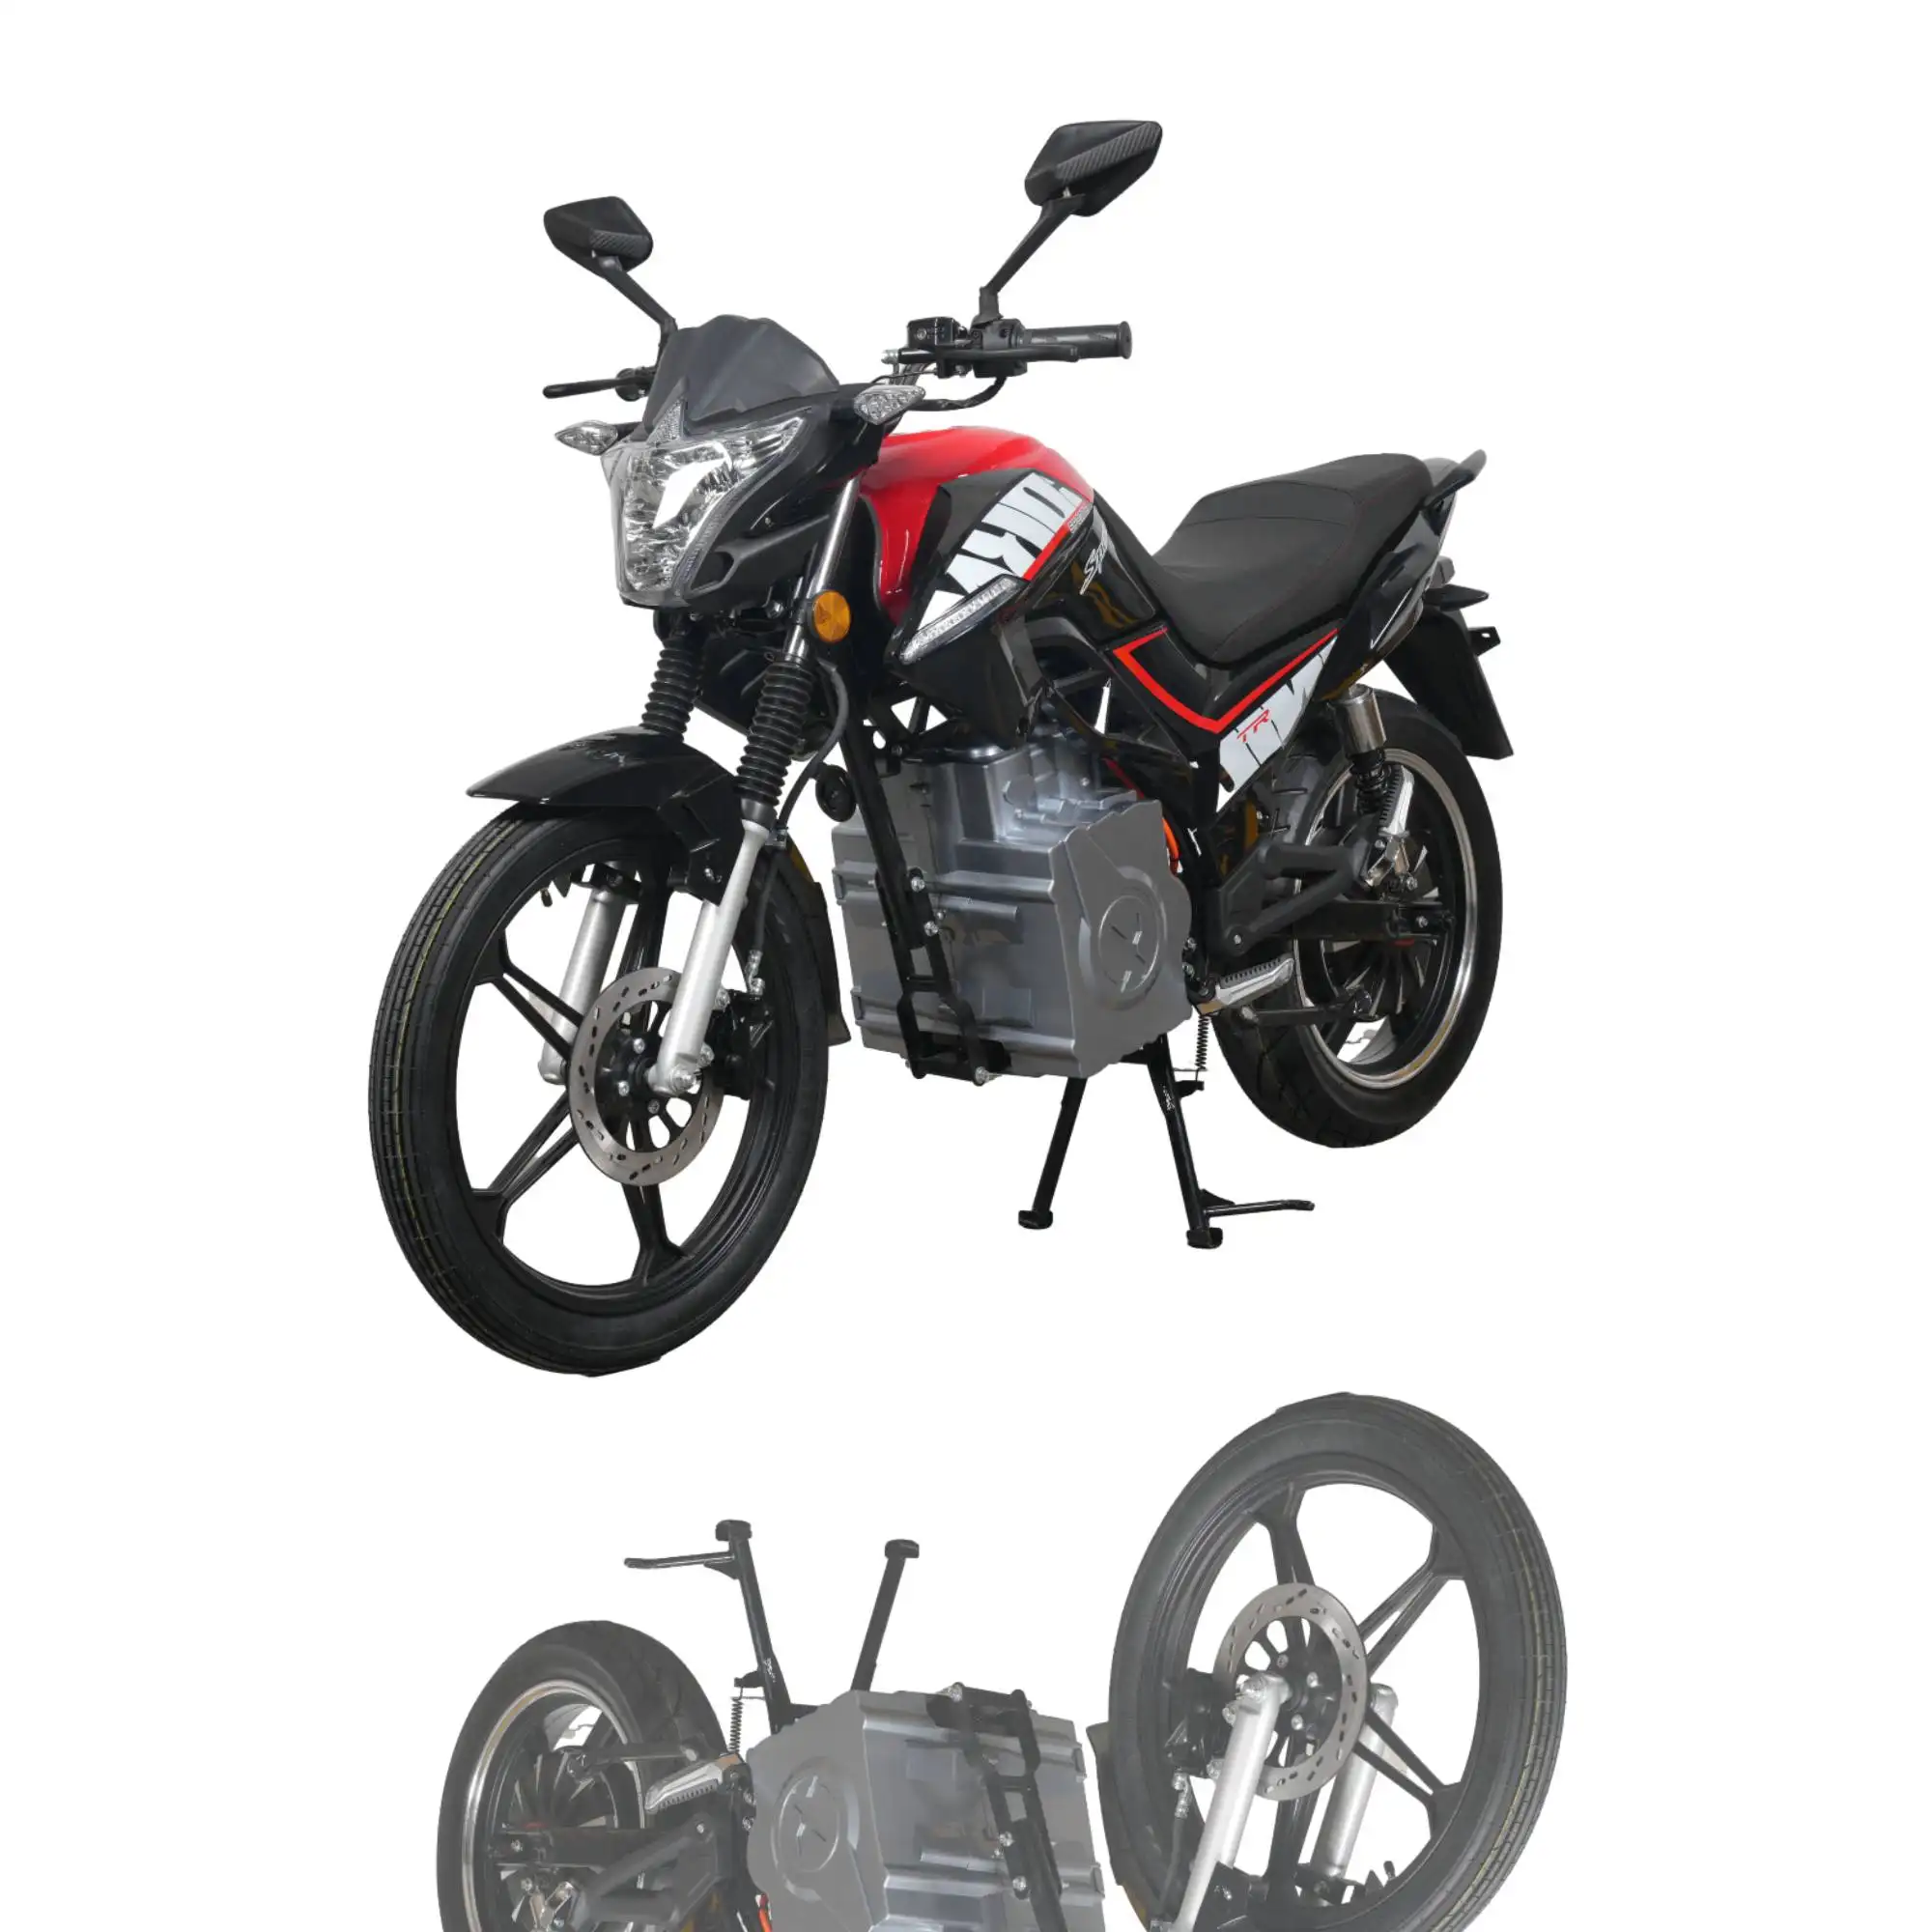 Personalizado 3000w Super Power Chopper Dirt Bike Adulto Racing Off-road motocicletas elétricas